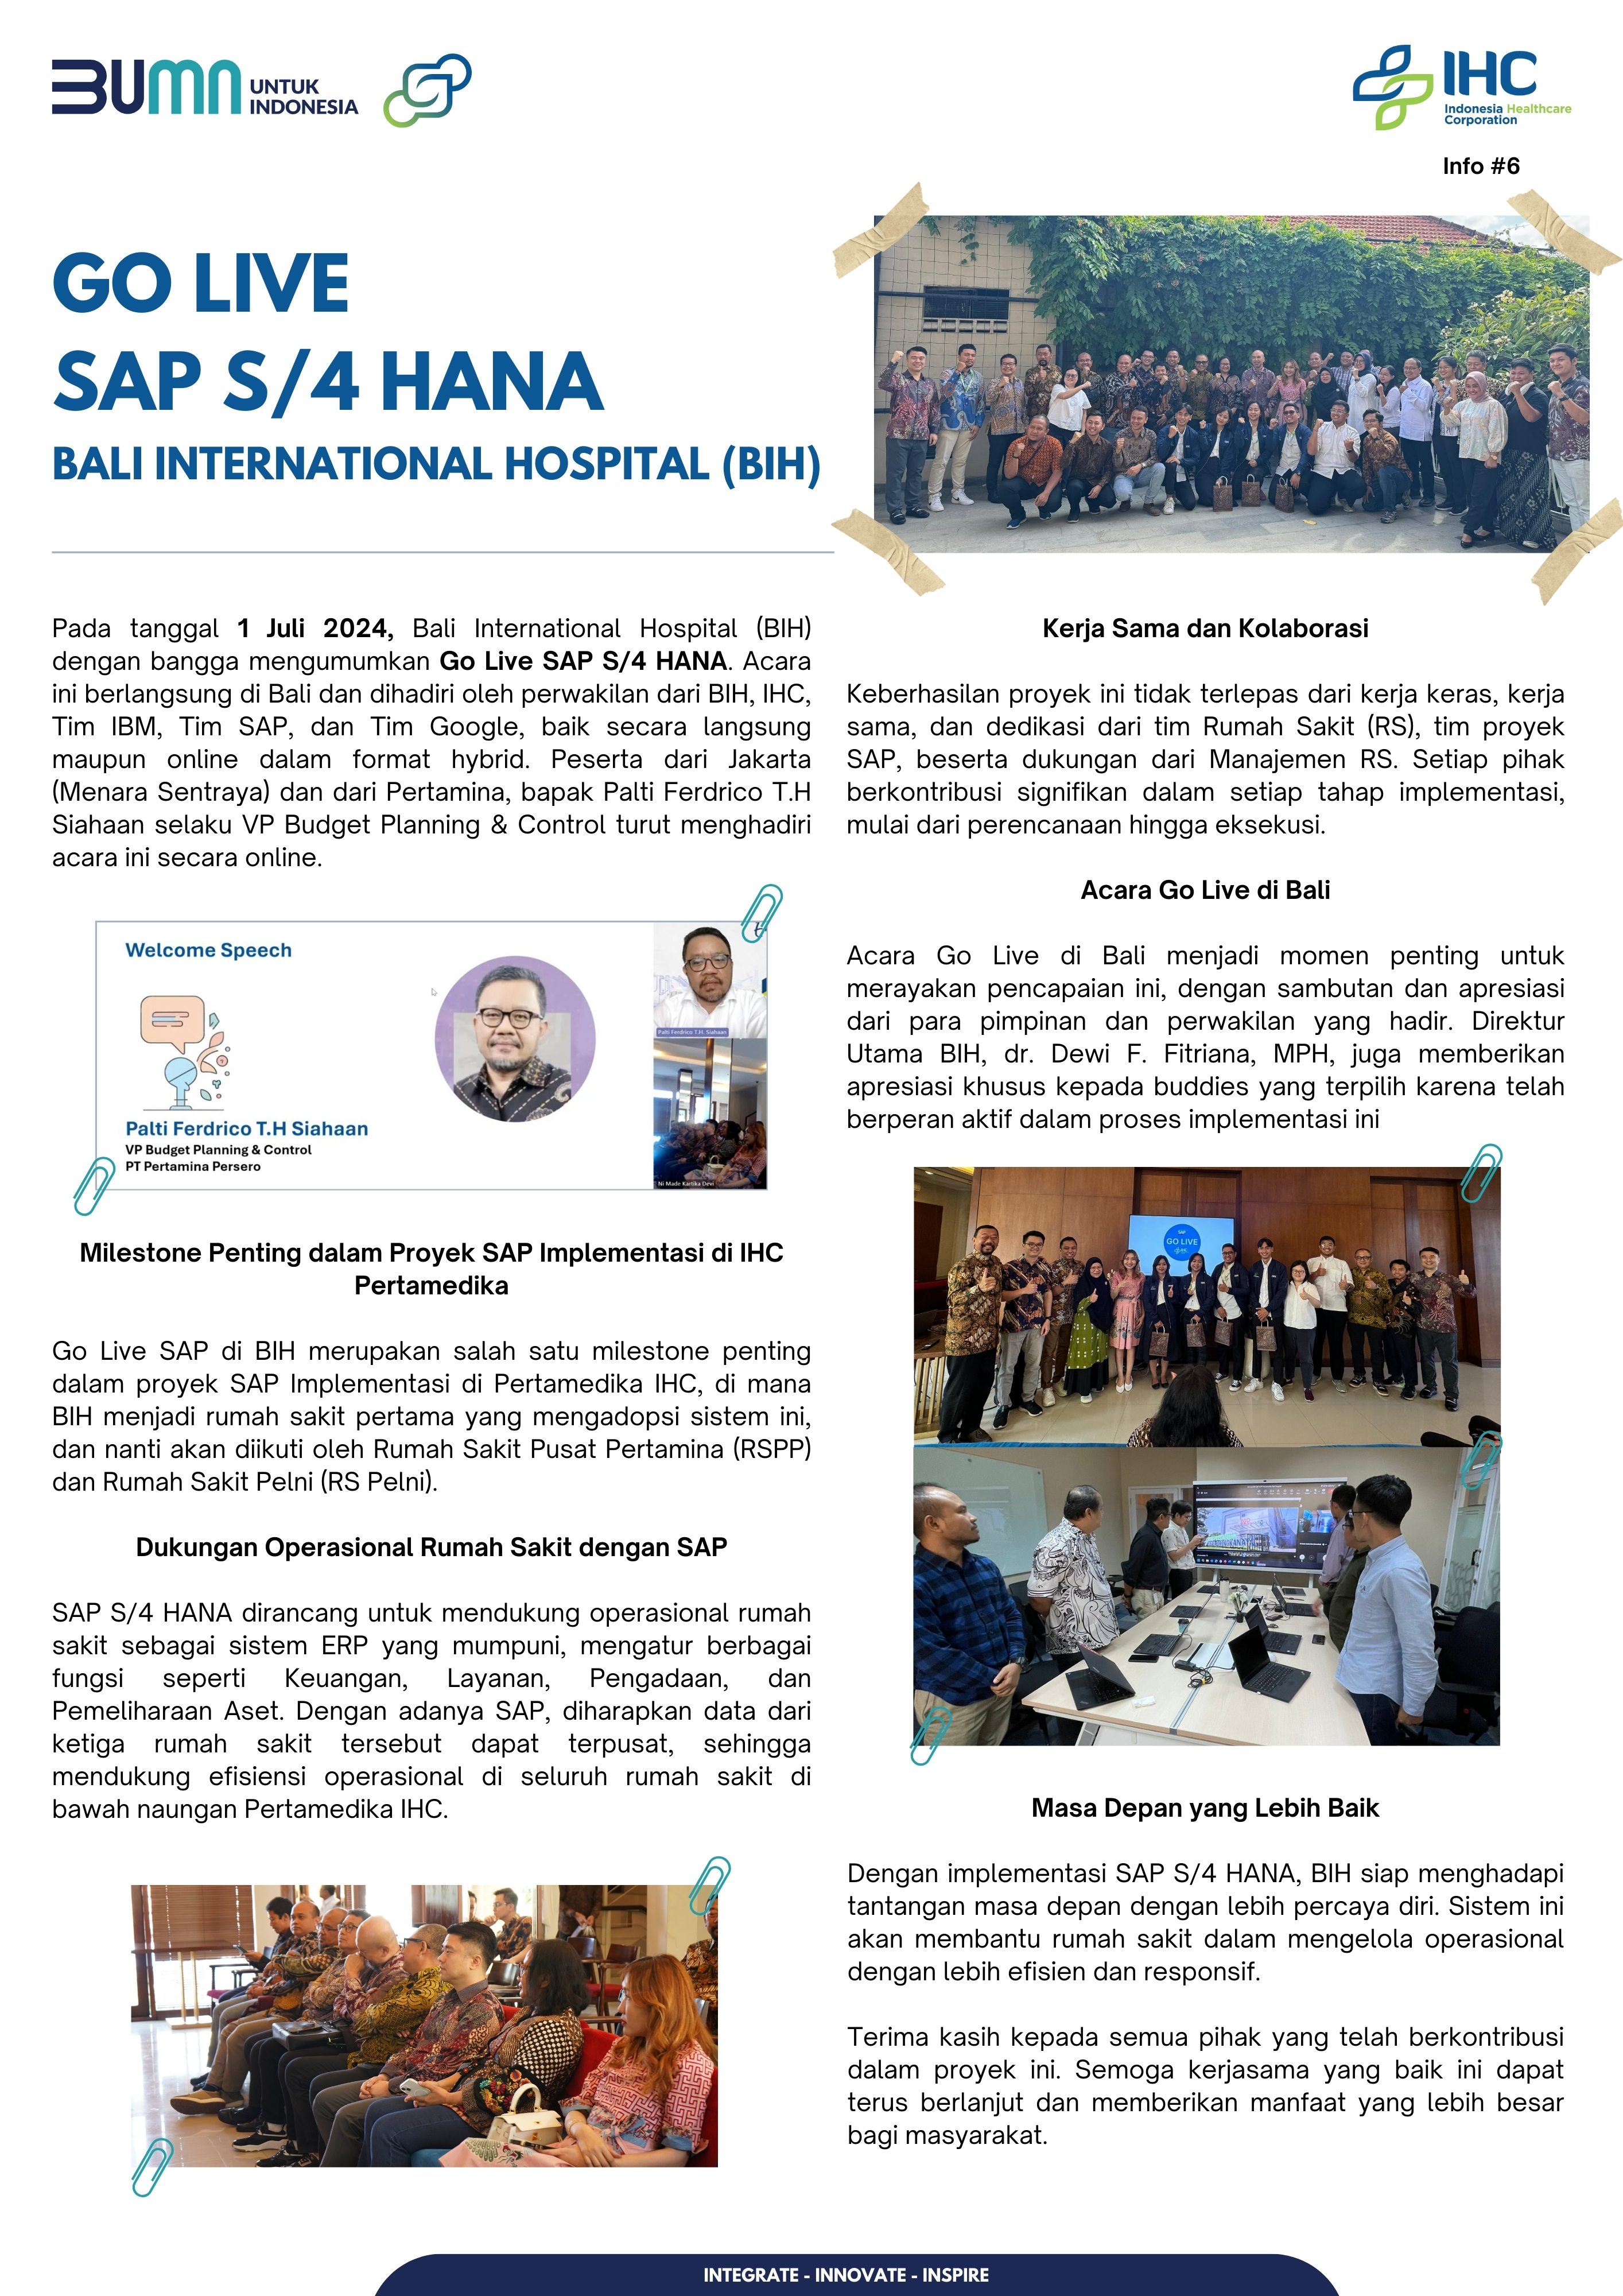 Go Live SAP S/4 HANA - Bali International Hospital